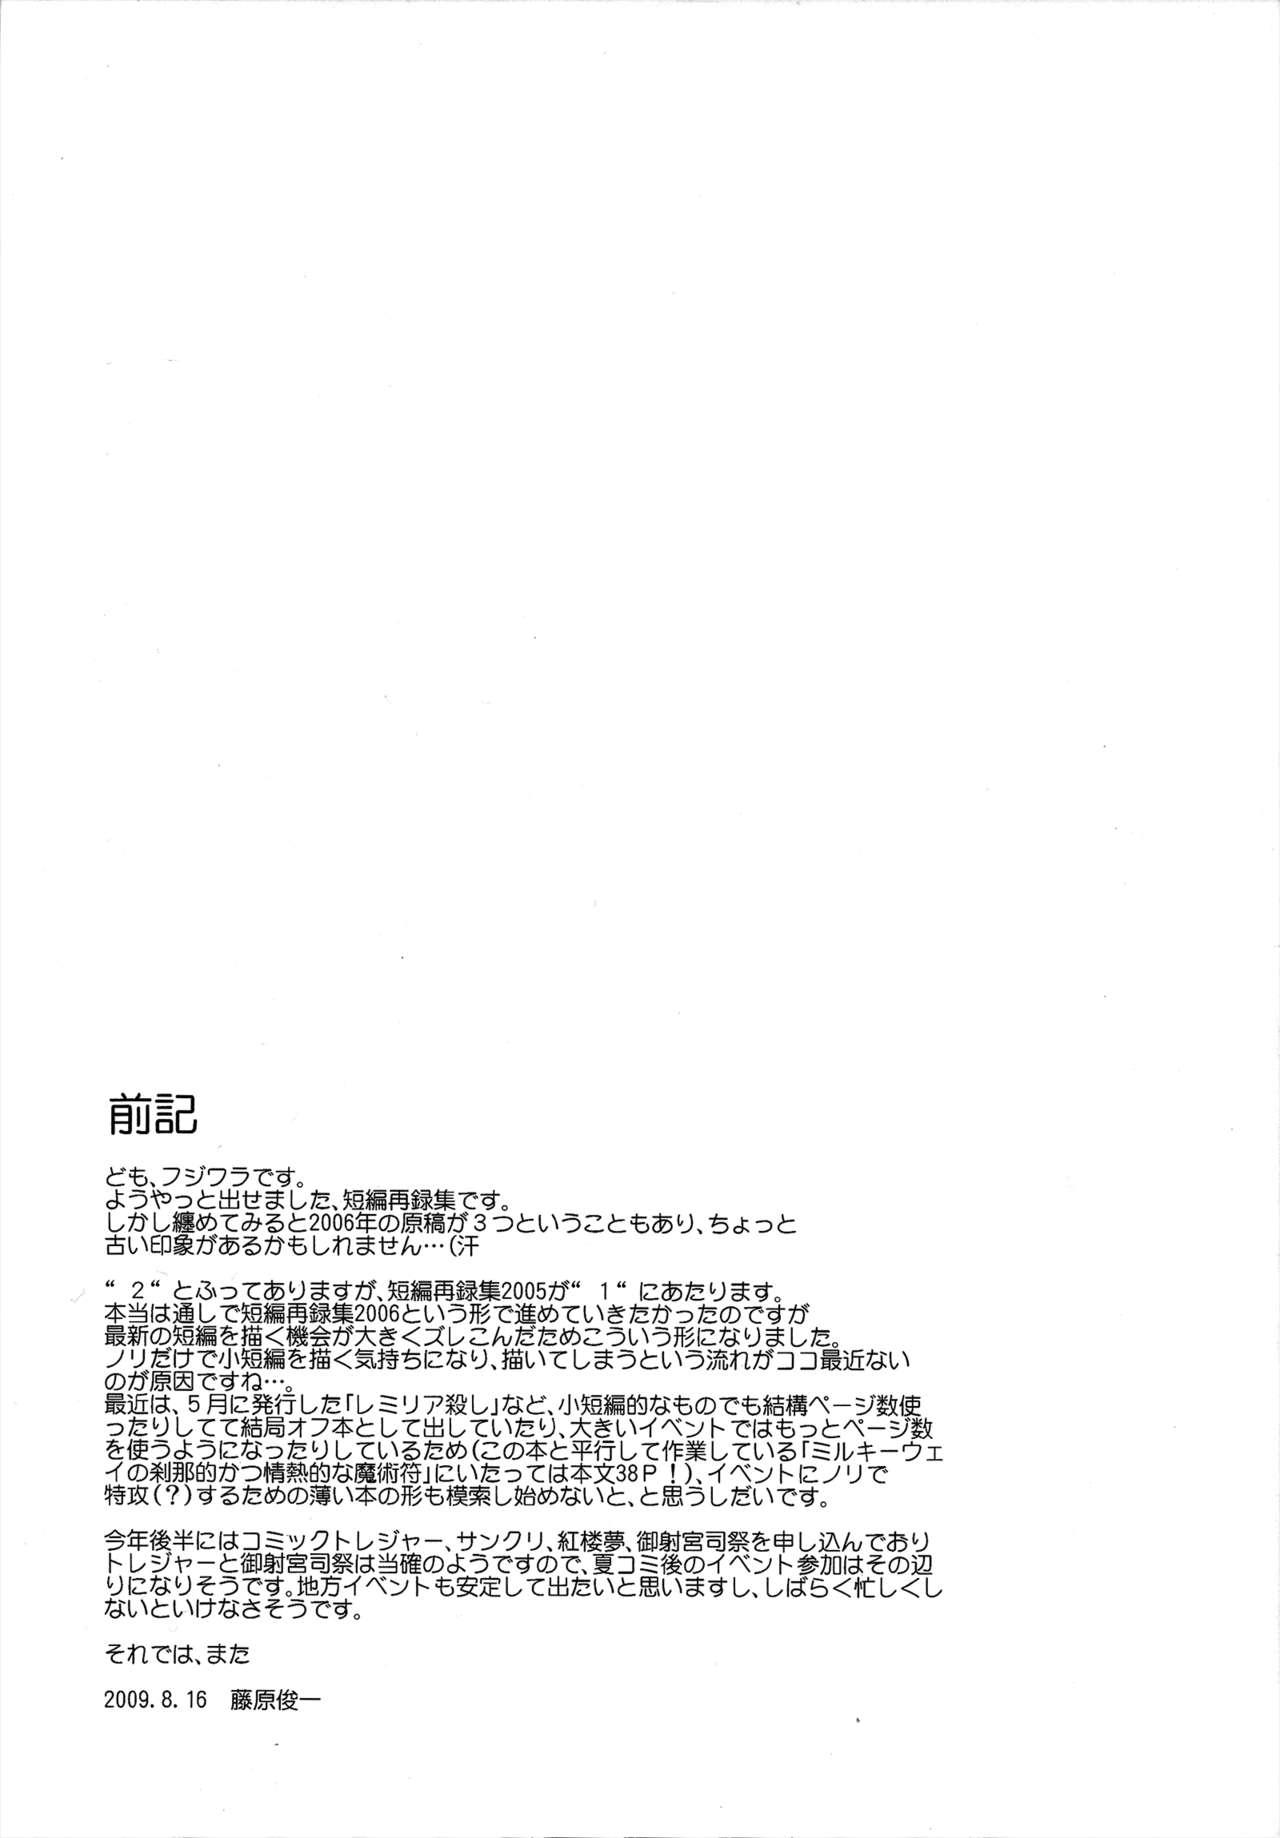 Matures Touhou Ukiyo Emaki - Tanpen Sairokushuu 2 - Touhou project Muscle - Page 3